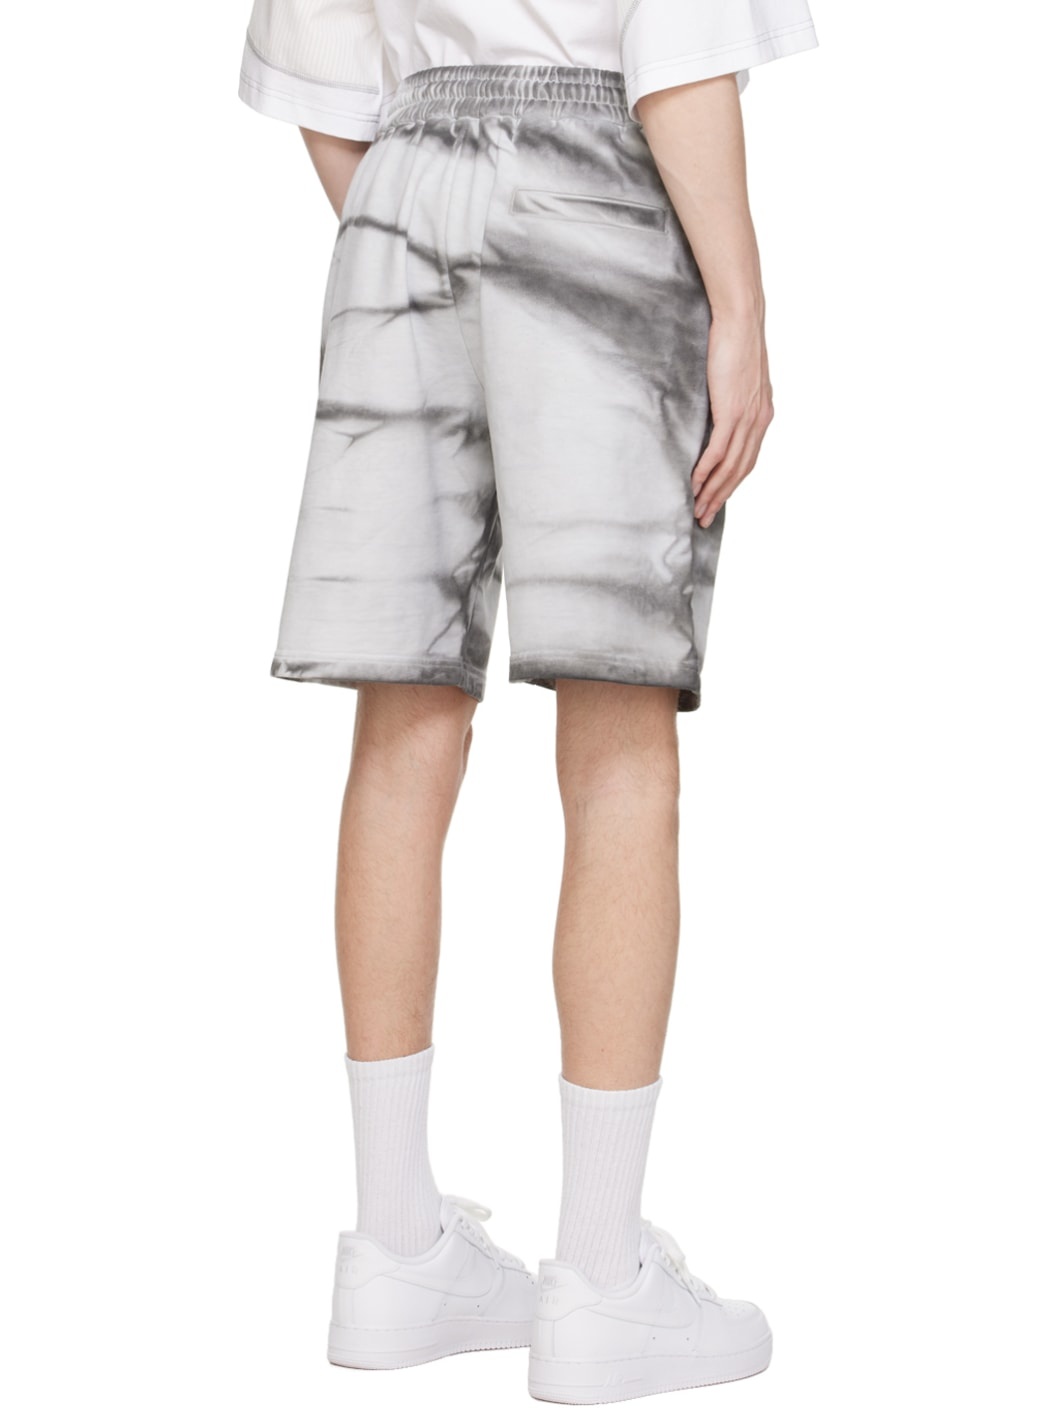 Gray Tie-Dye Shorts - 3